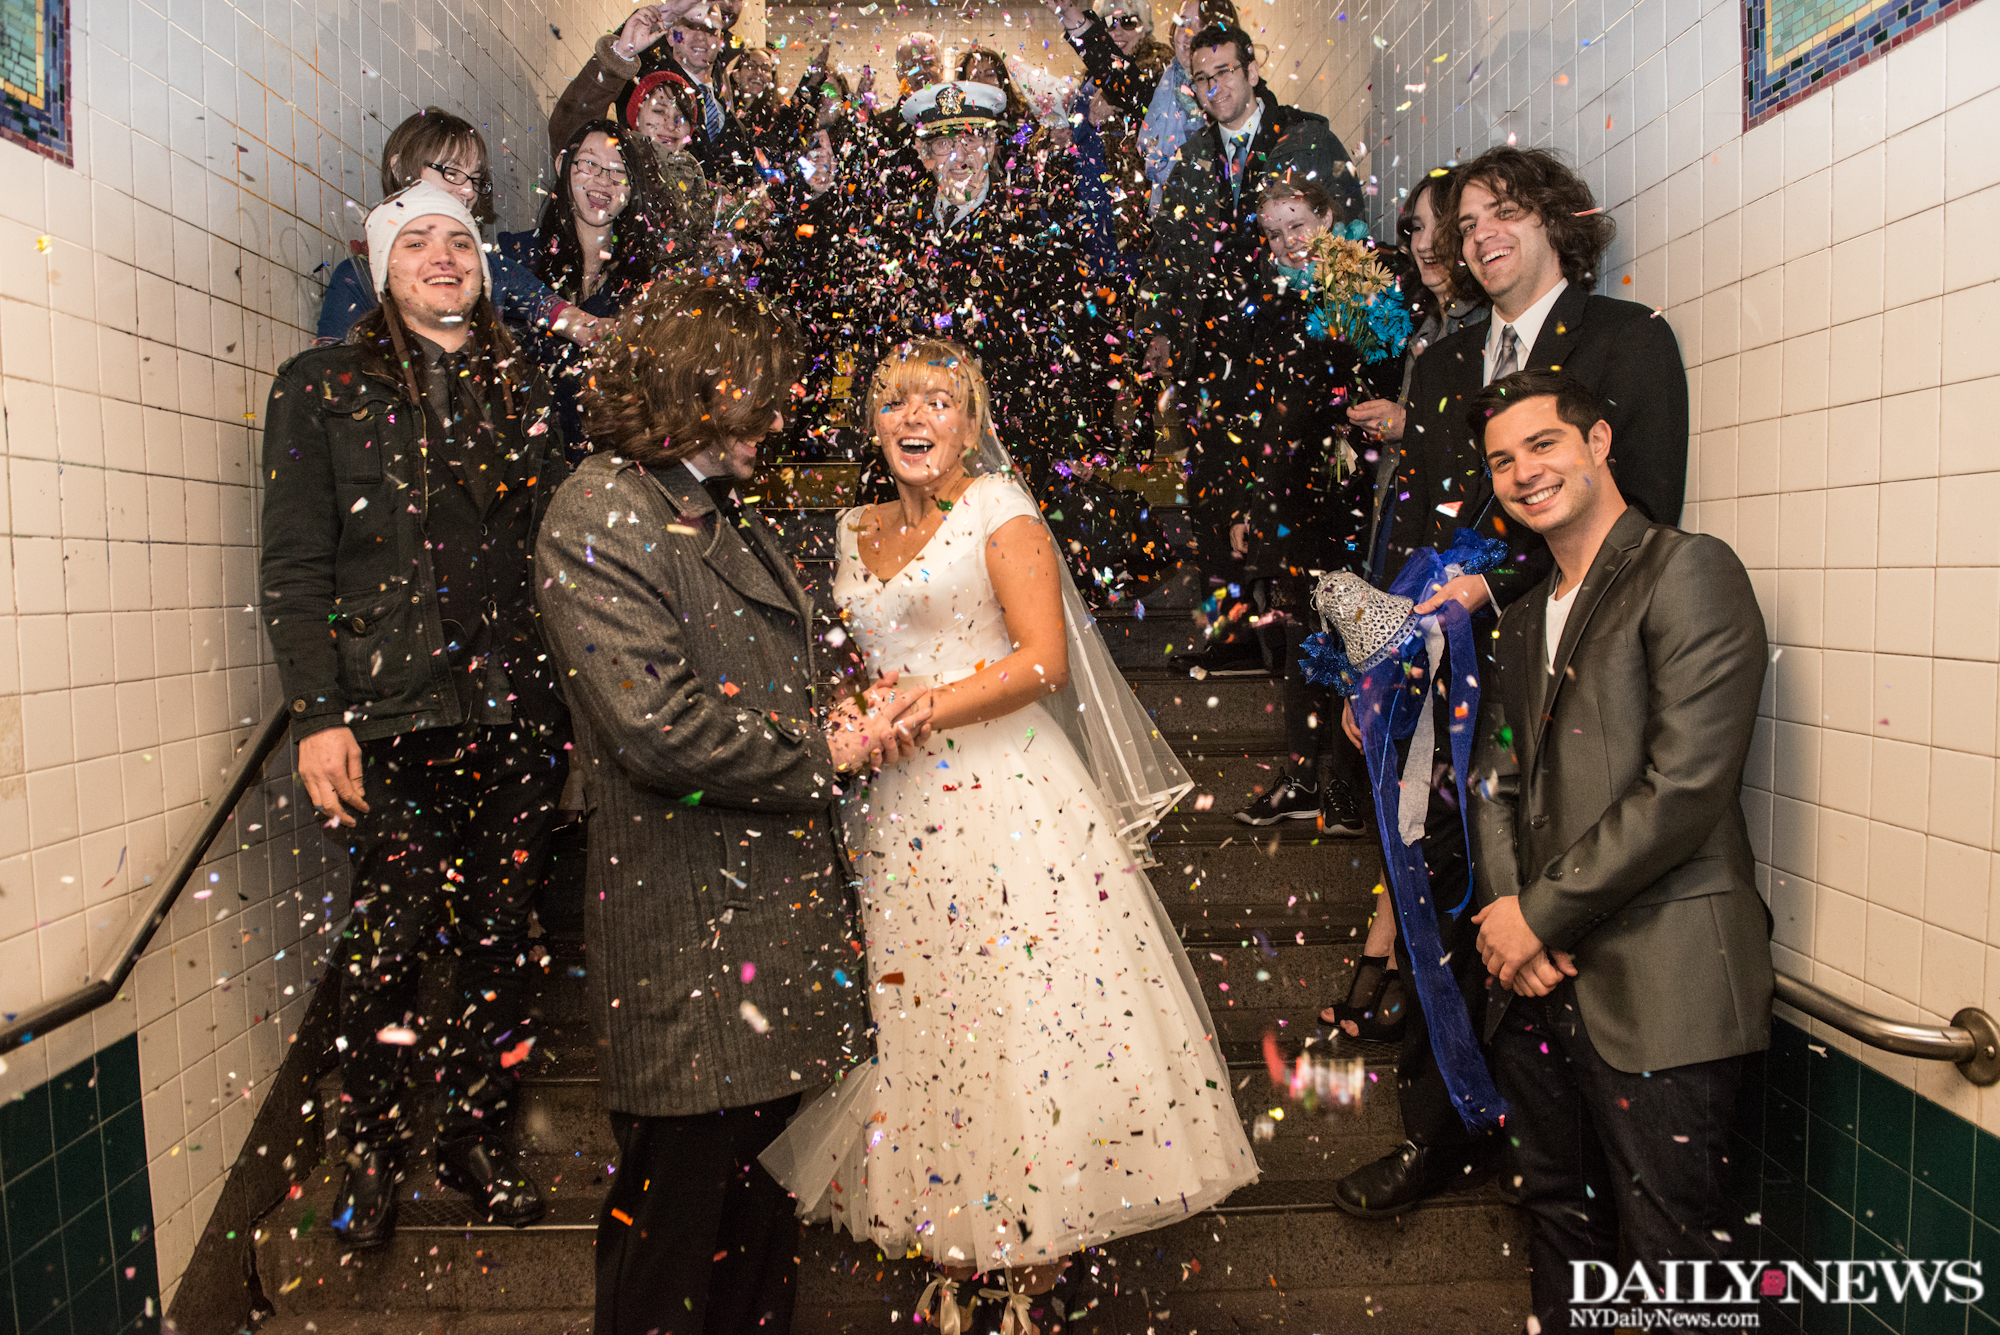 PHOTO: Hector Irakliotis and Tatyana Sandler celebrate their wedding on the N train